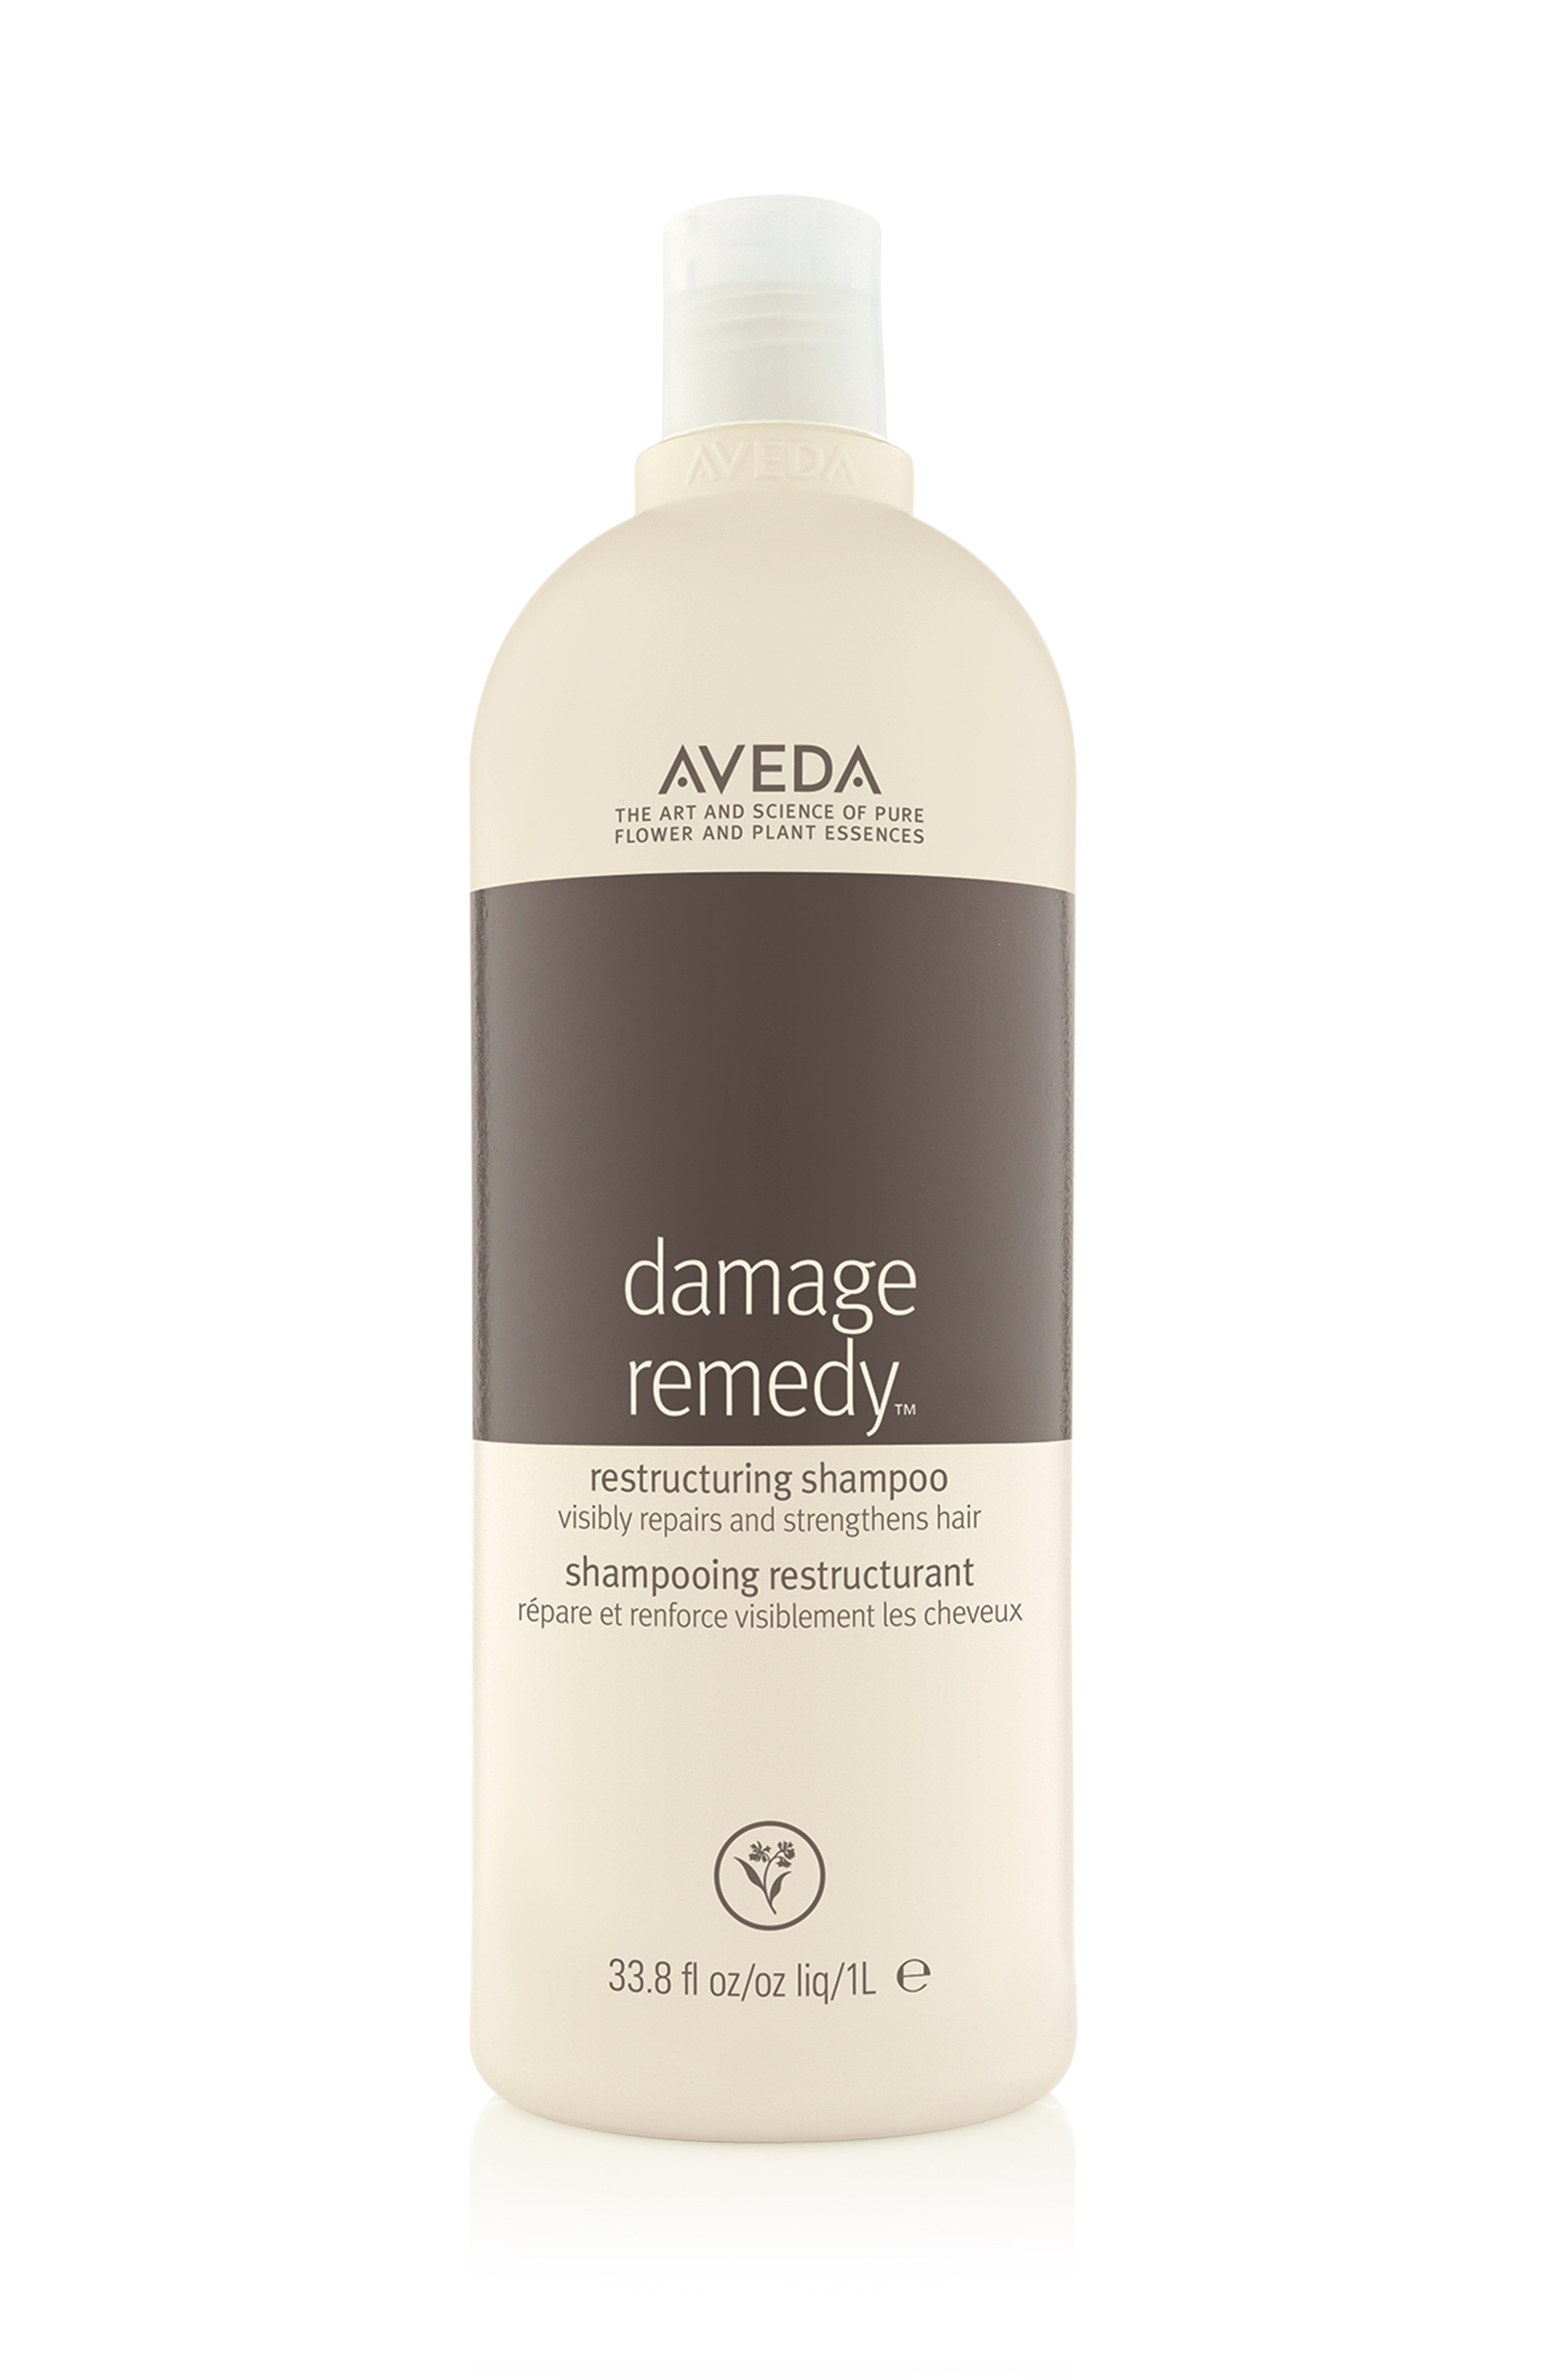 Aveda damage remedy shampoo 1000 ml, White / Brown, large image number 0